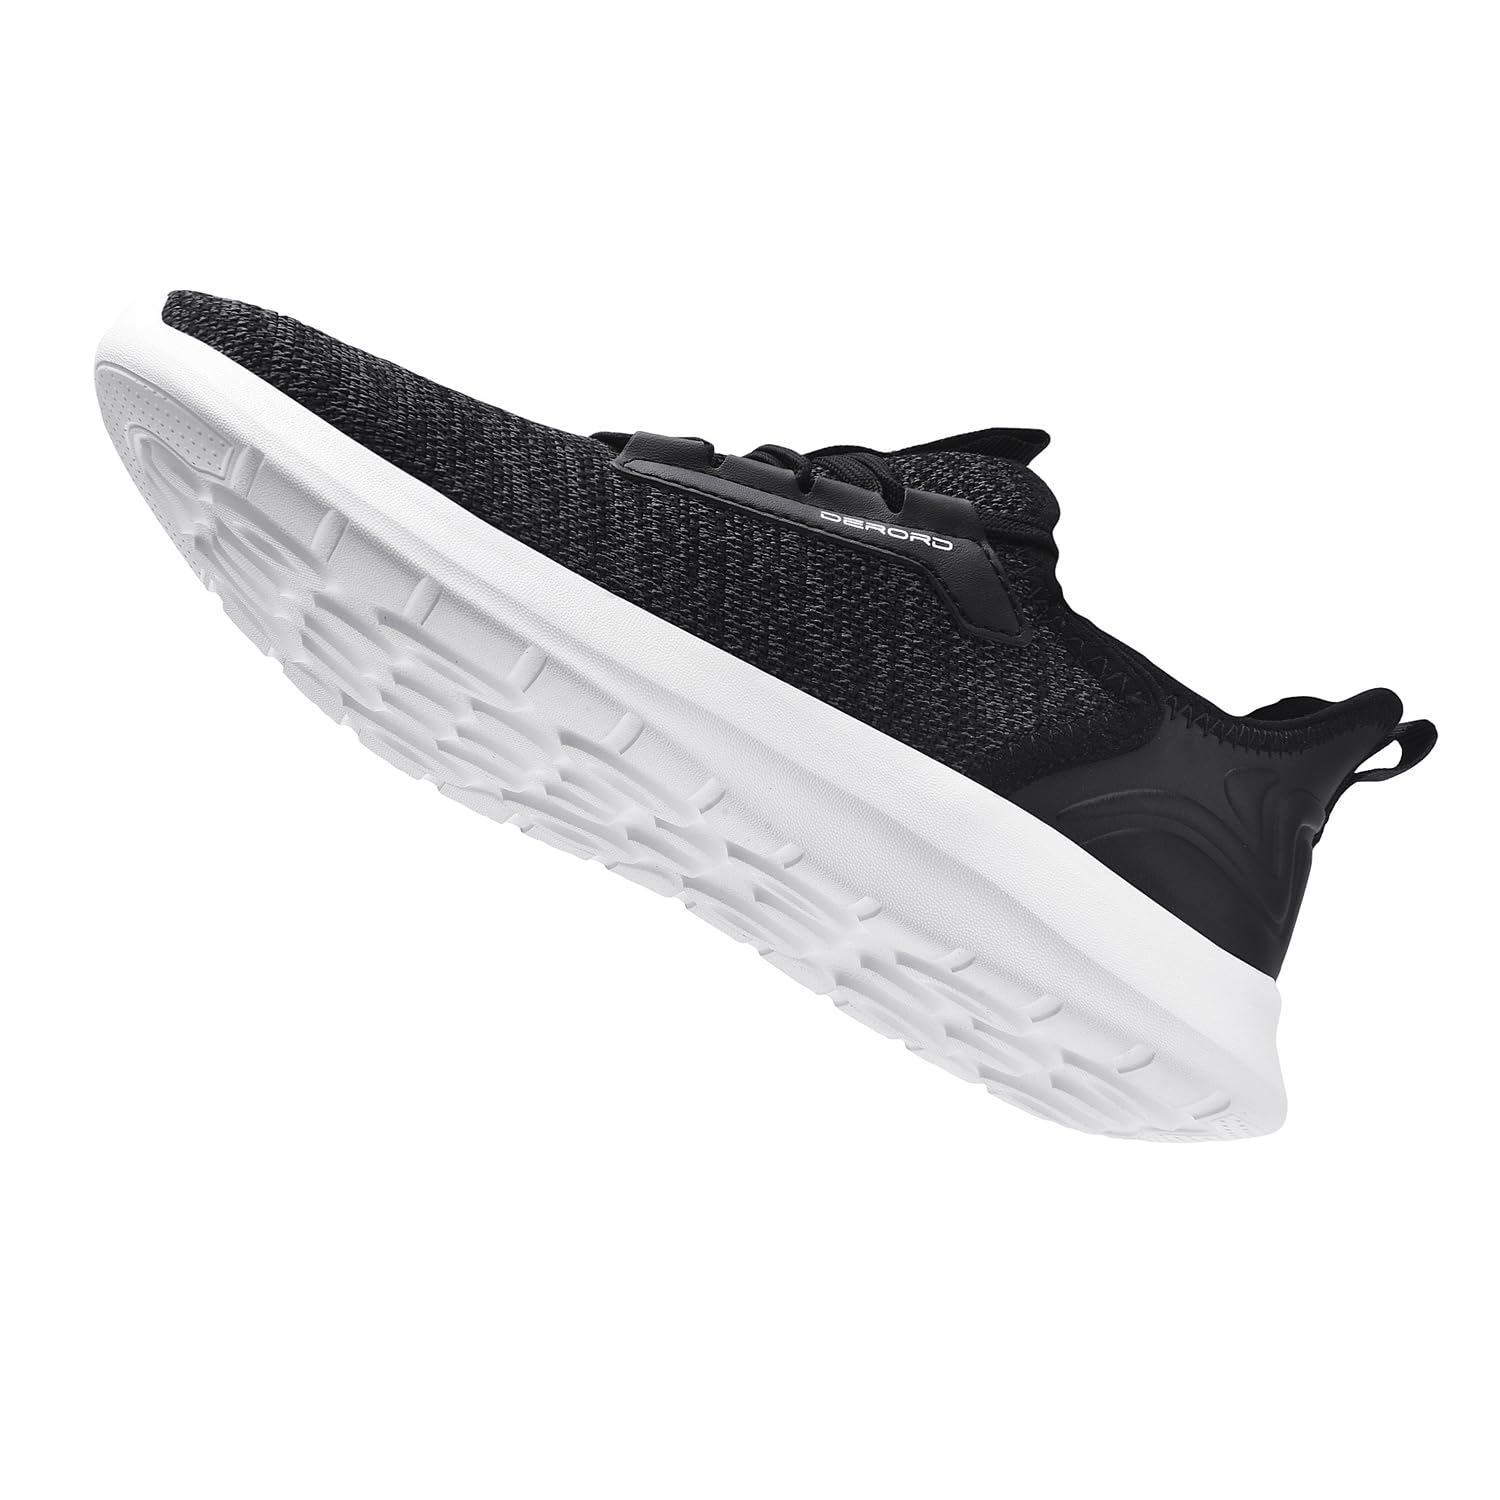 DERORD Women’s Walking Running Shoes Slip on Lightweight Casual Sneakers (Black, Adult, Women, Numeric_8, Numeric, us_Footwear_Size_System, Medium)